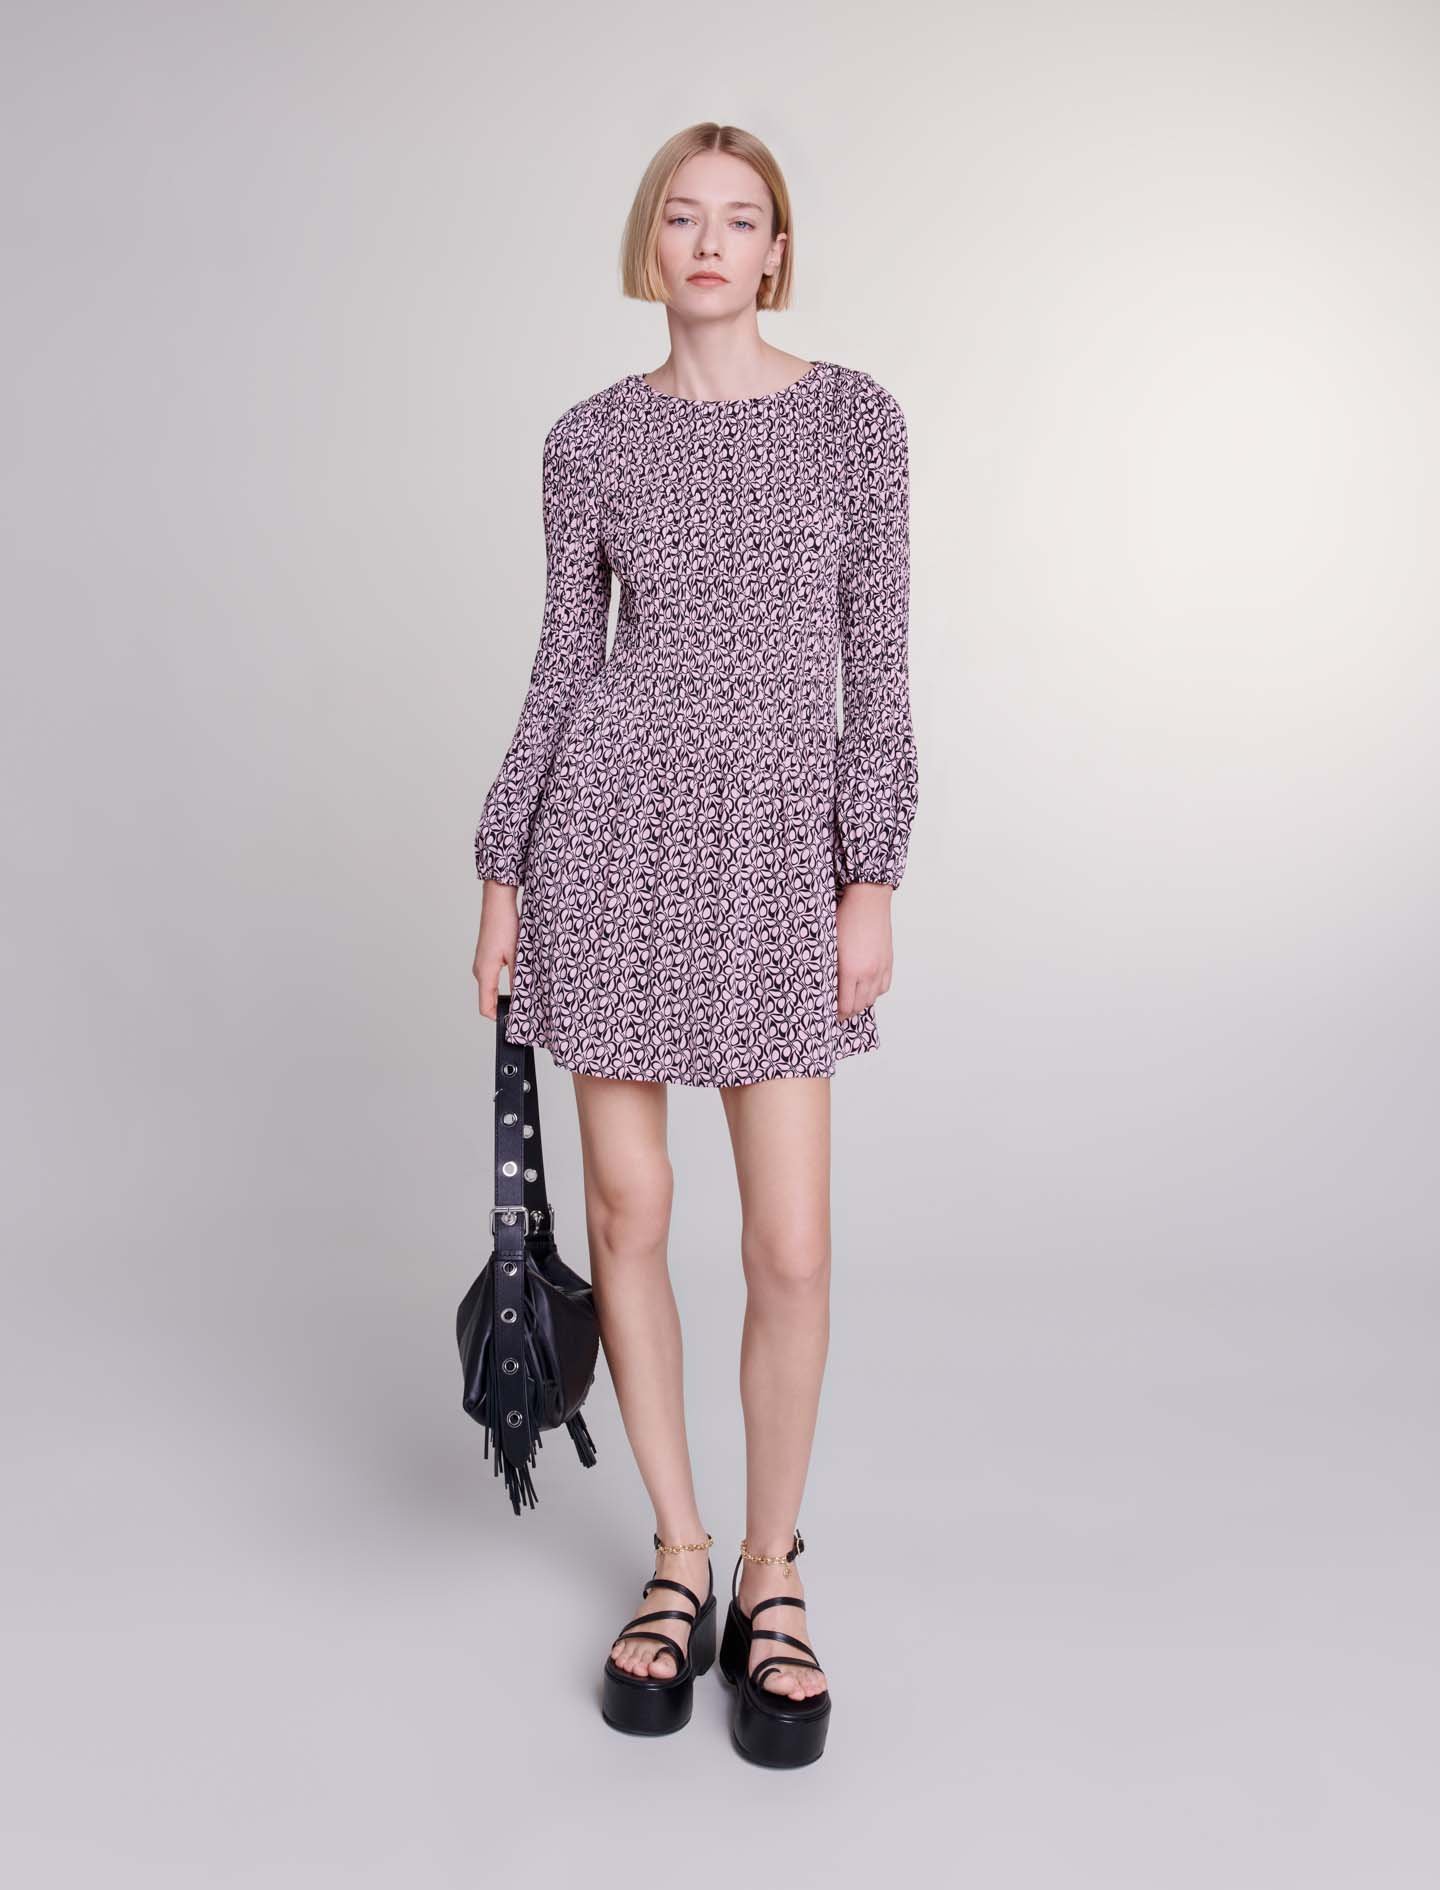 Mixte's polyester Short patterned dress for Spring/Summer, size Mixte-Dresses-US L / FR 40, in color Pink / Black Butterfly Pink /